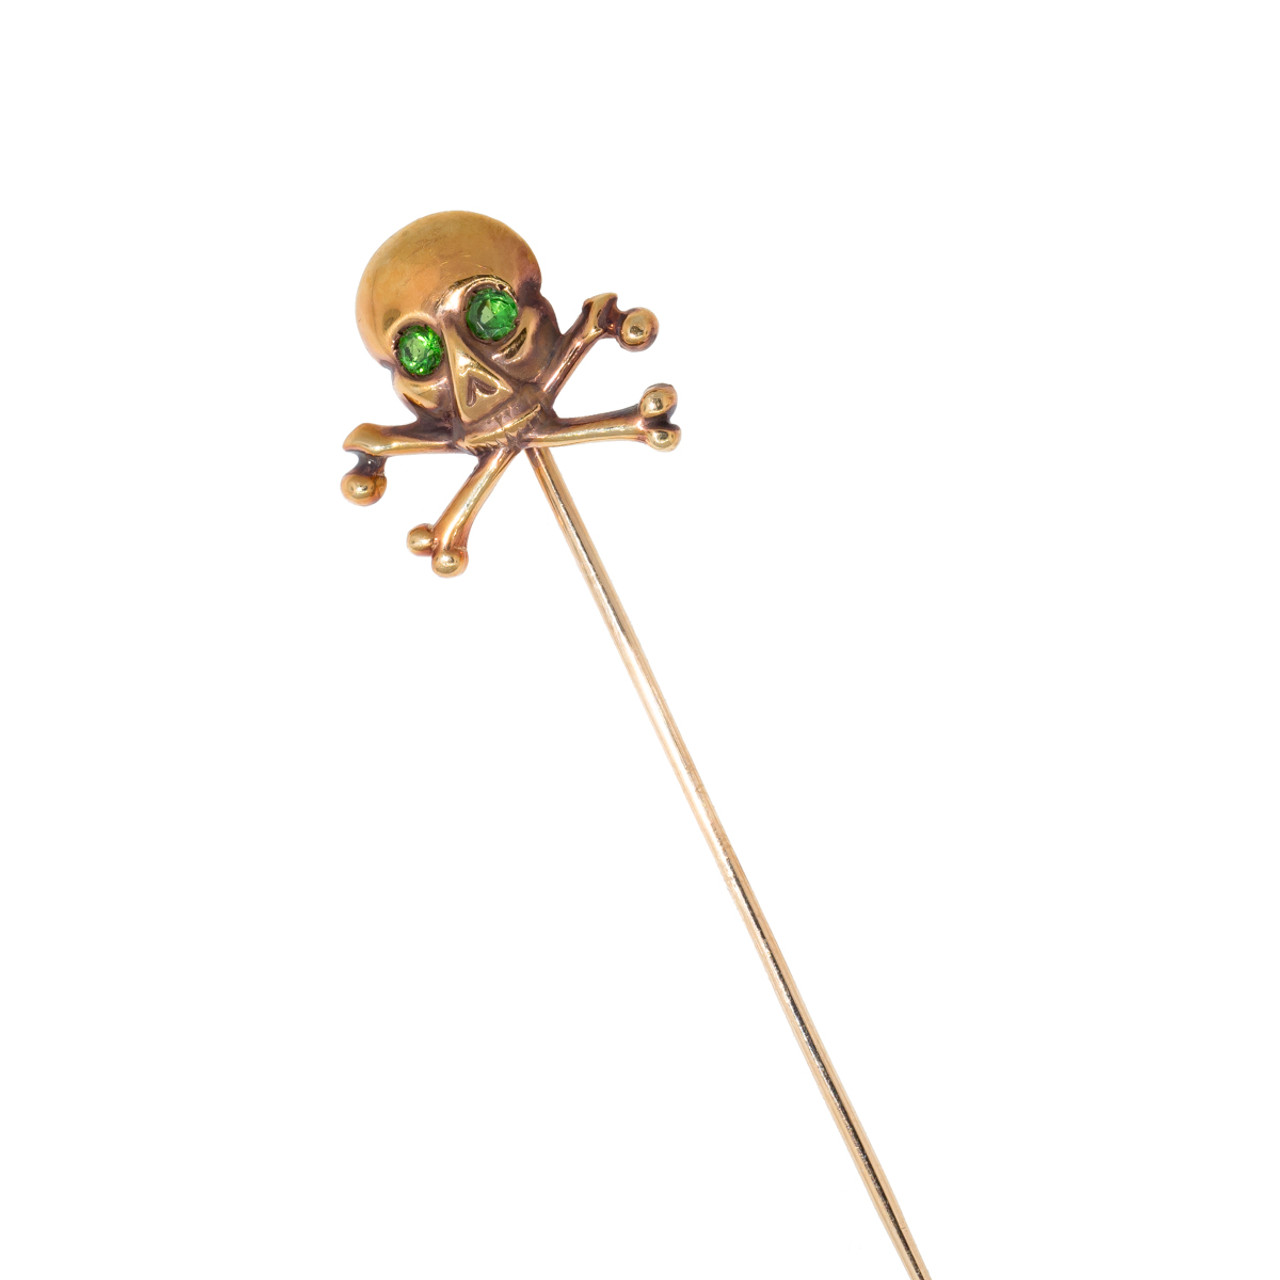 Antique: Rose Gold Skull and Crossbones Stick Pin with Glowing Demantoid Garnet Eyes